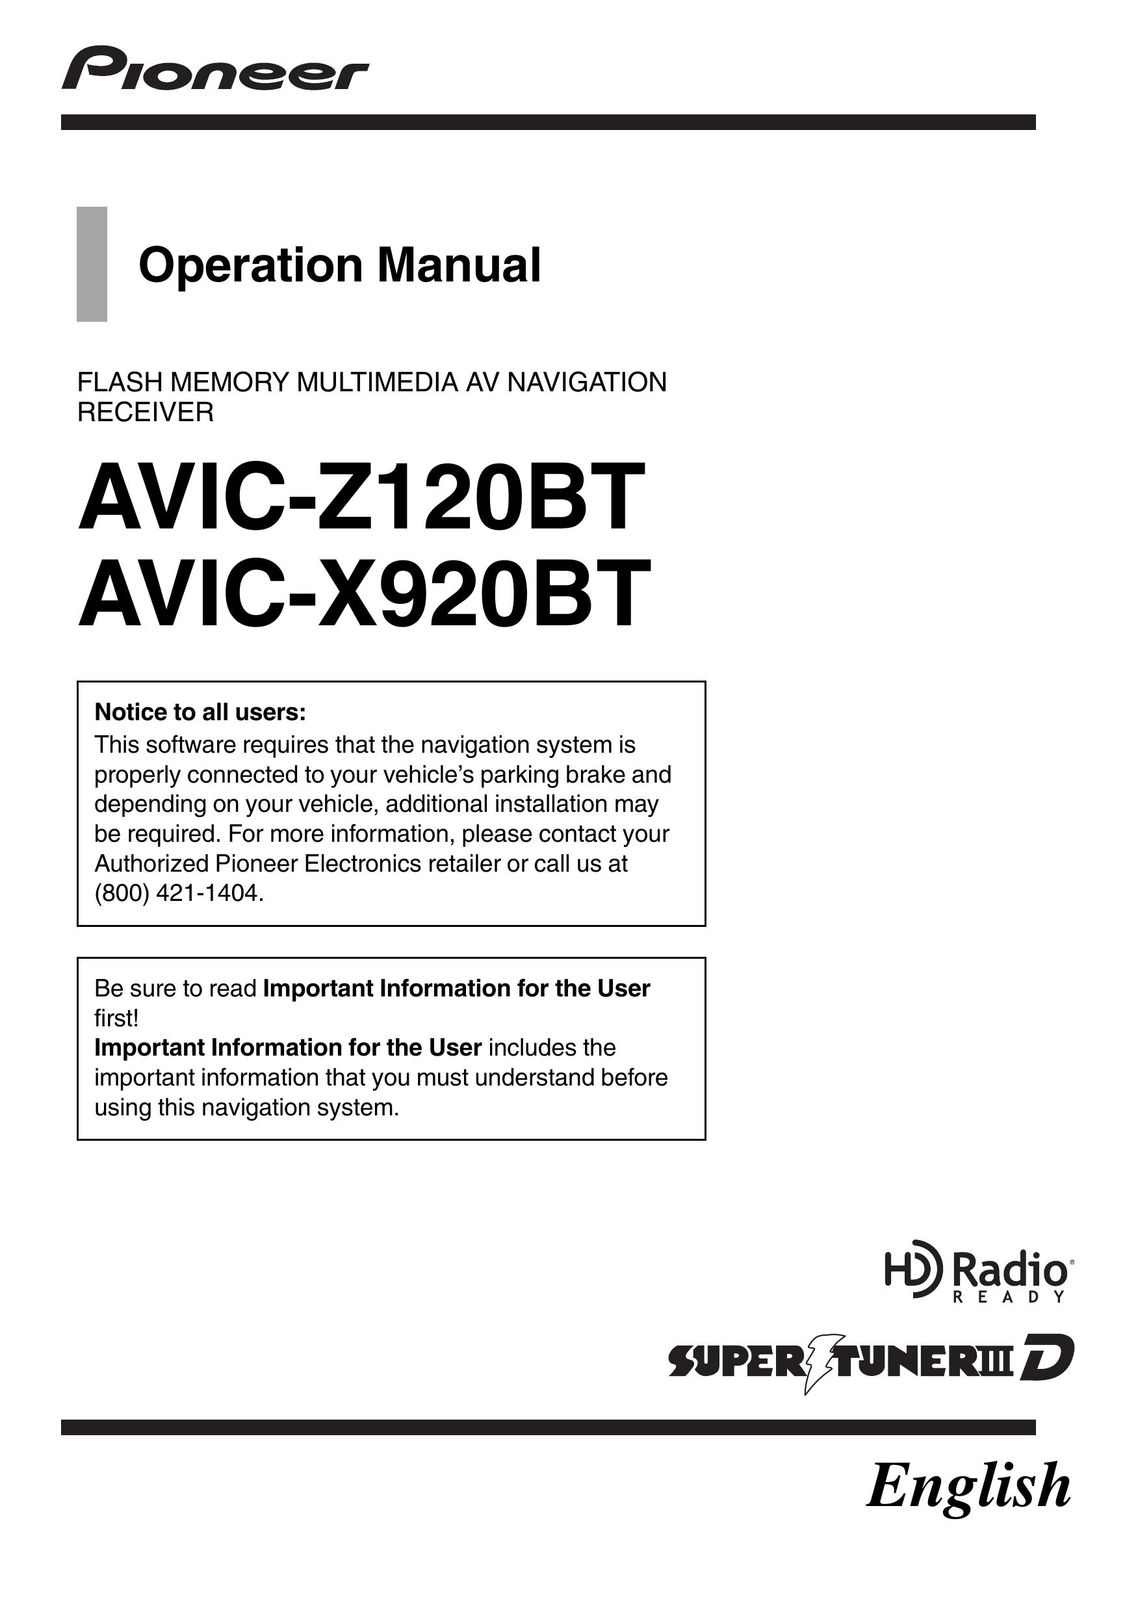 Pioneer AVIC-Z120BT Computer Drive User Manual